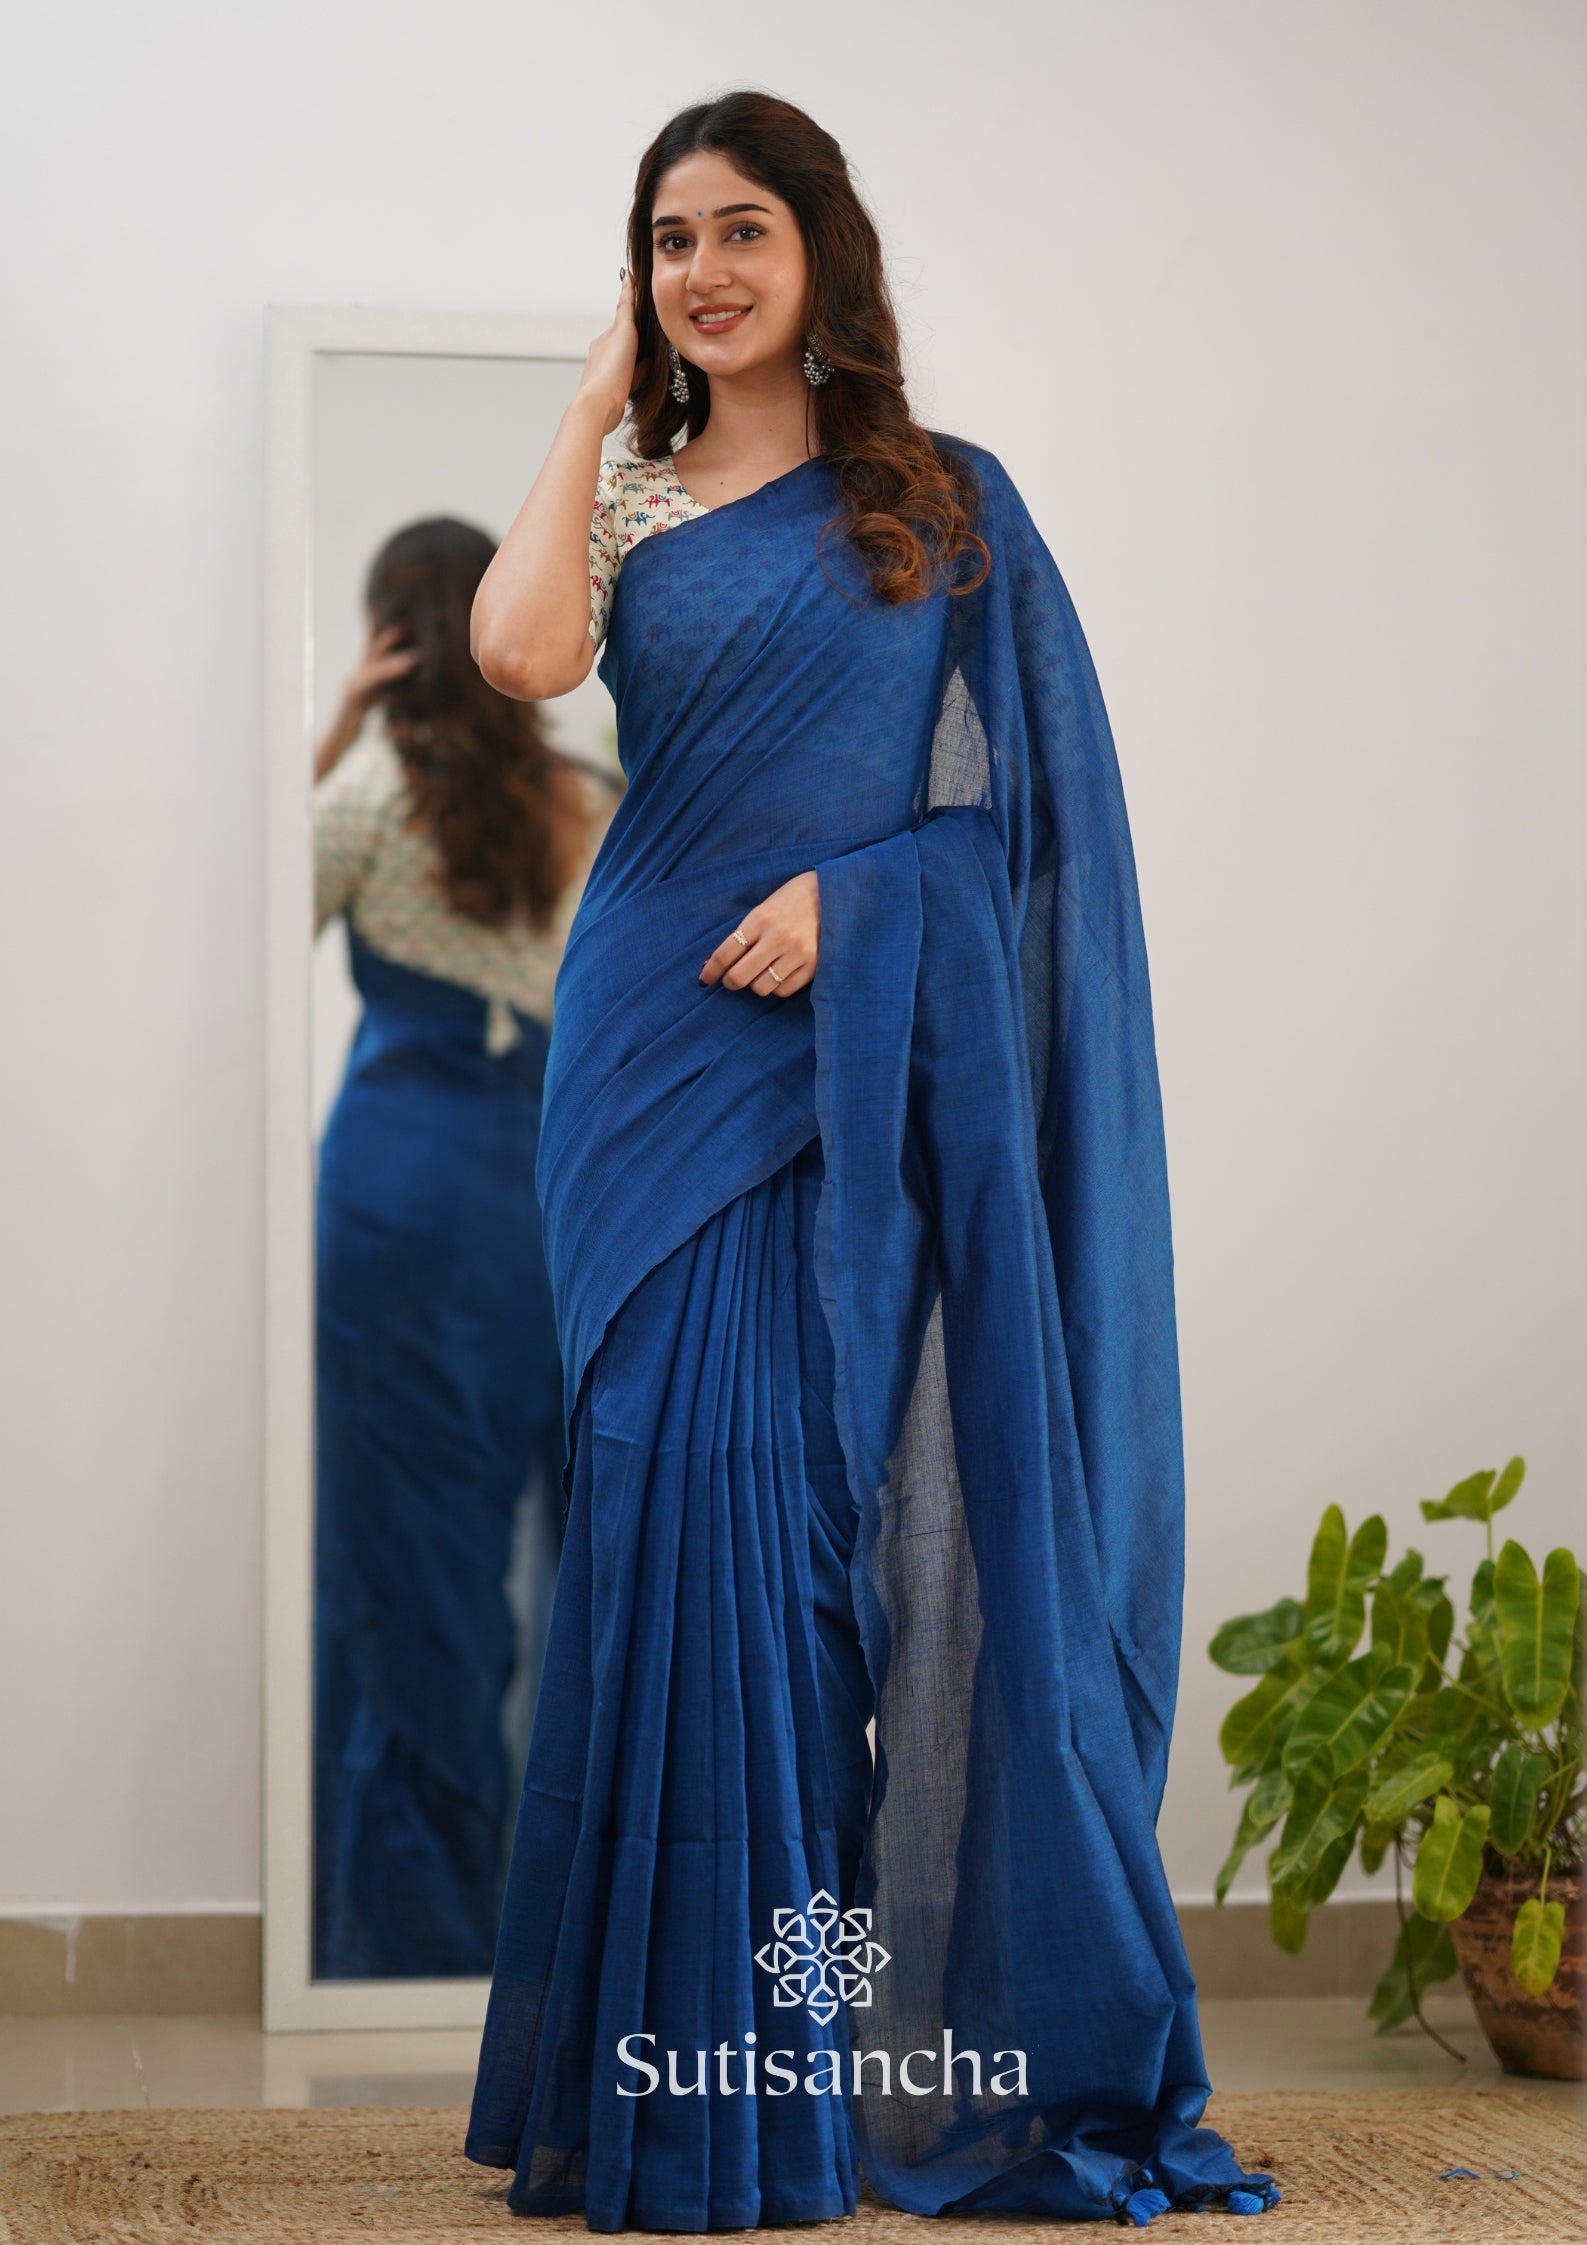 Sutisancha Indigo Handloom Cotton Saree & Designer Blouse